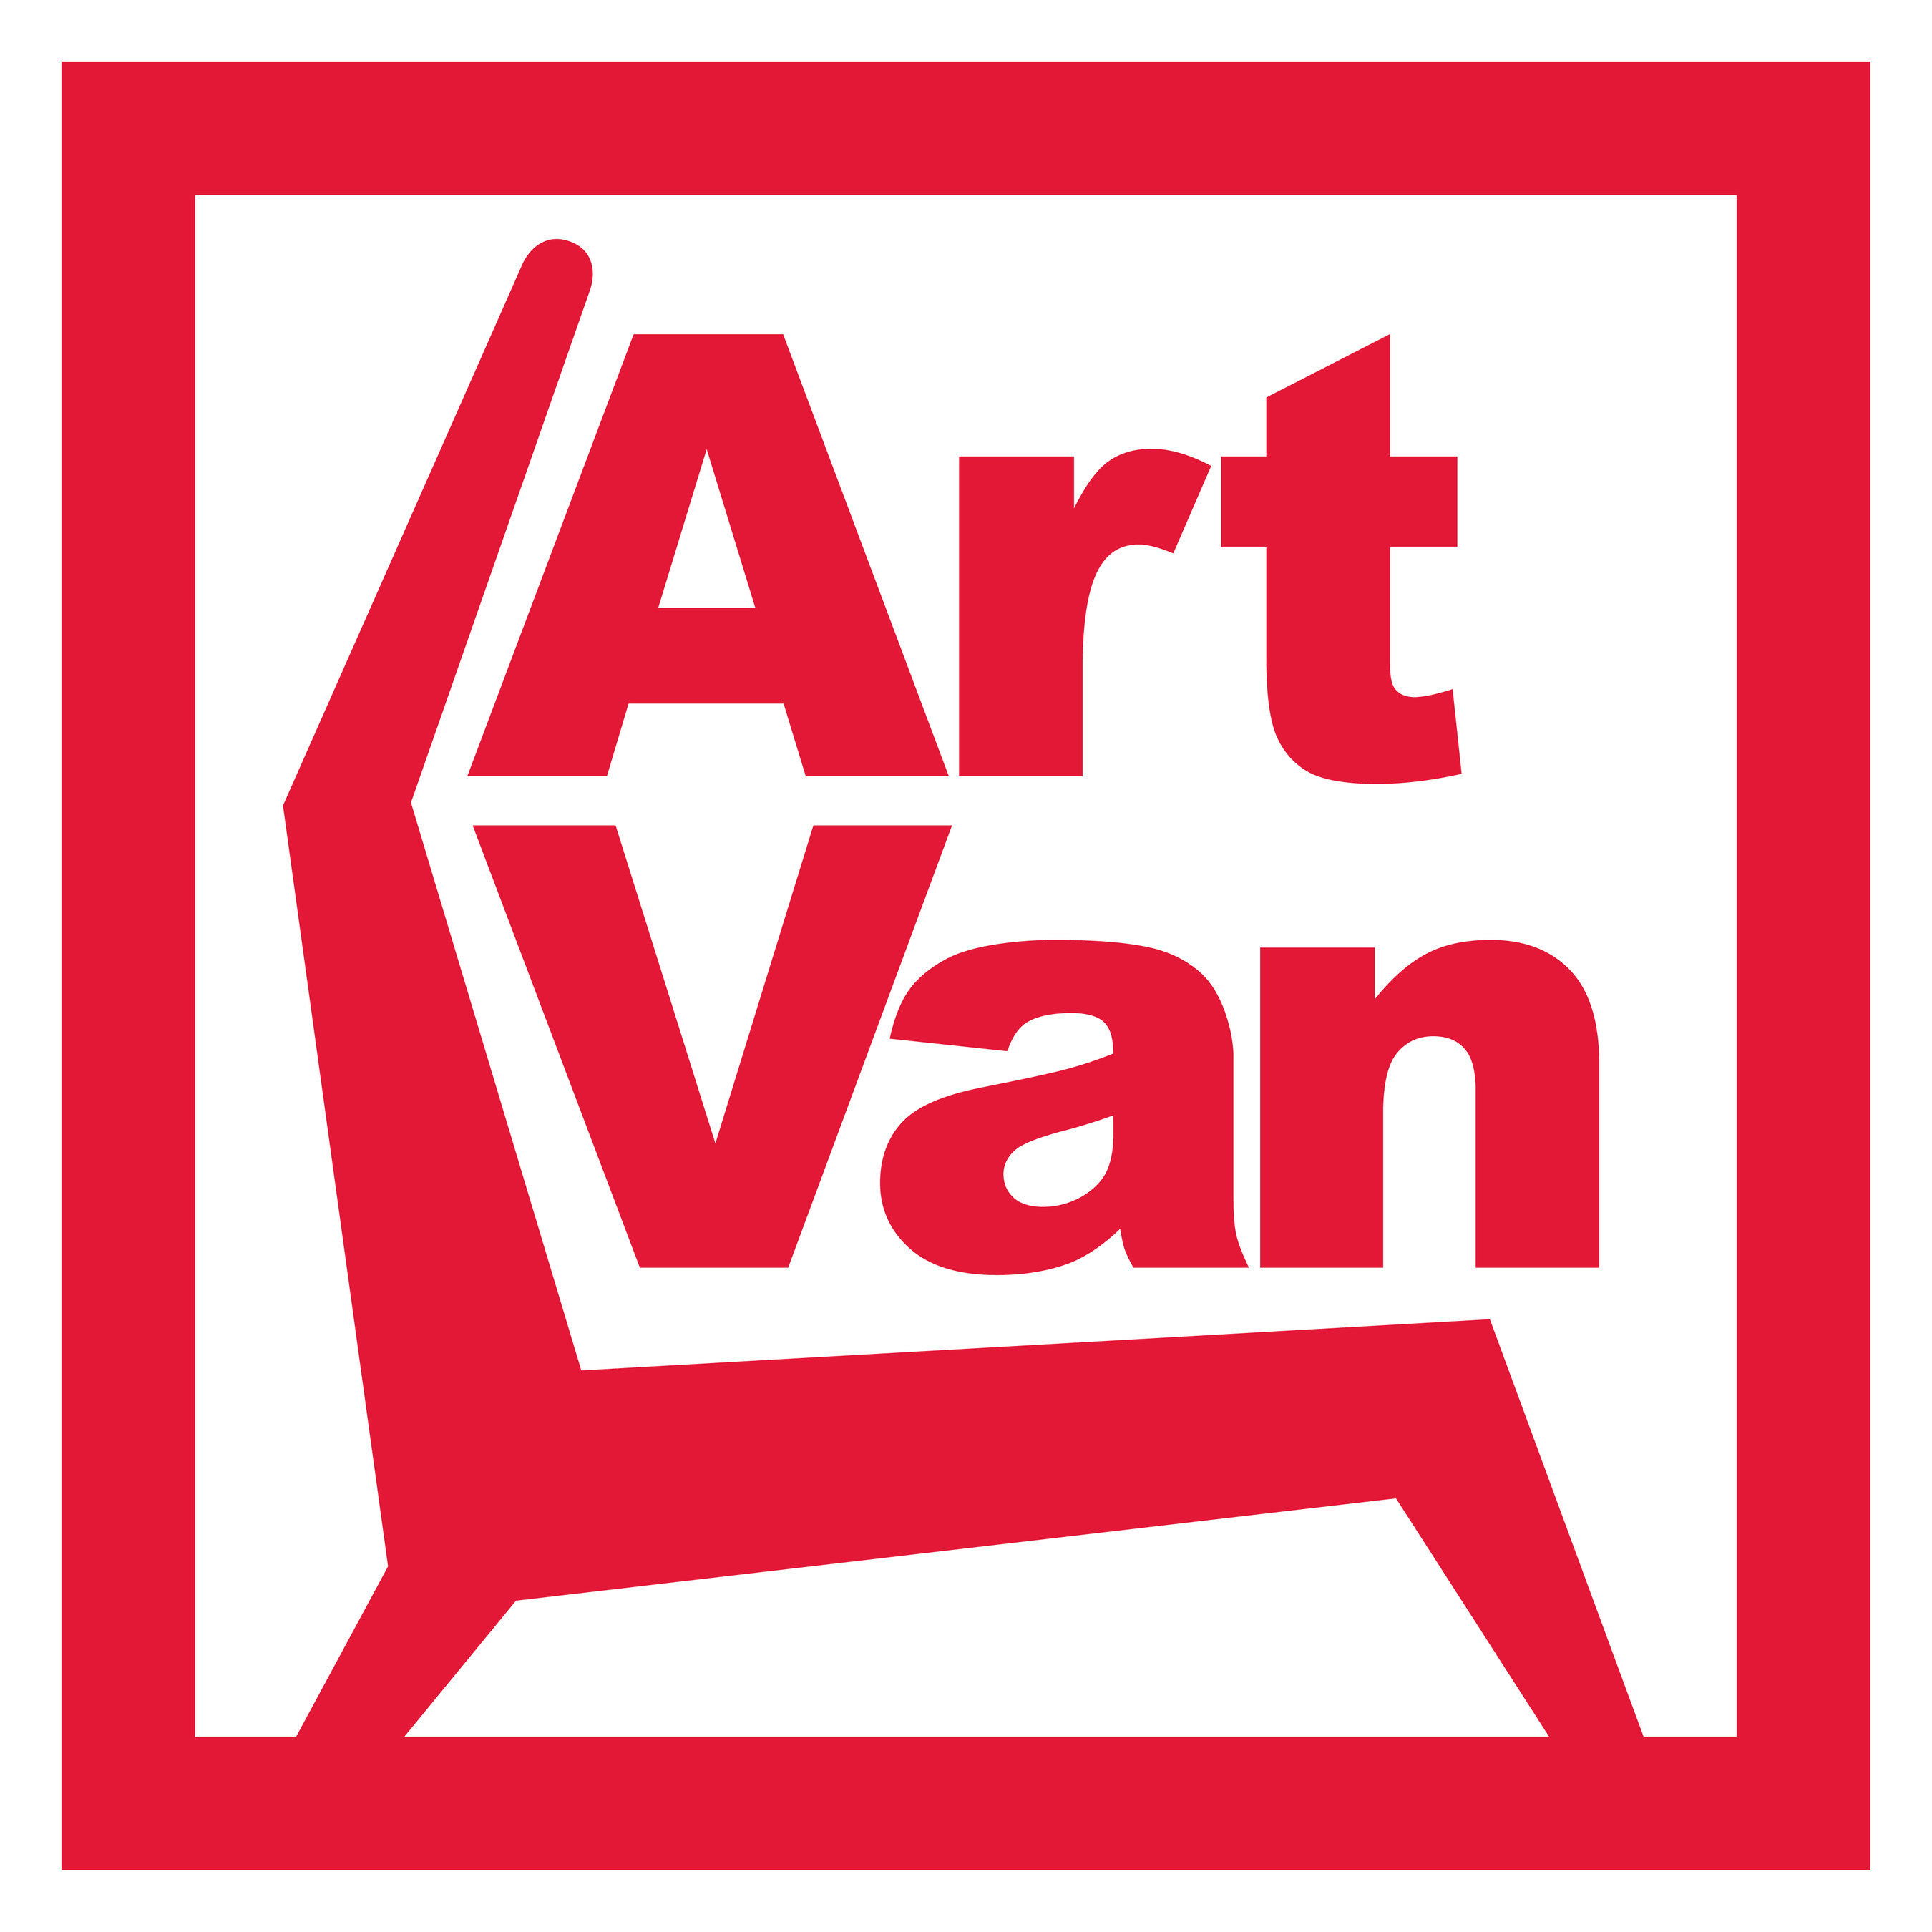 Art Van Furniture Logo